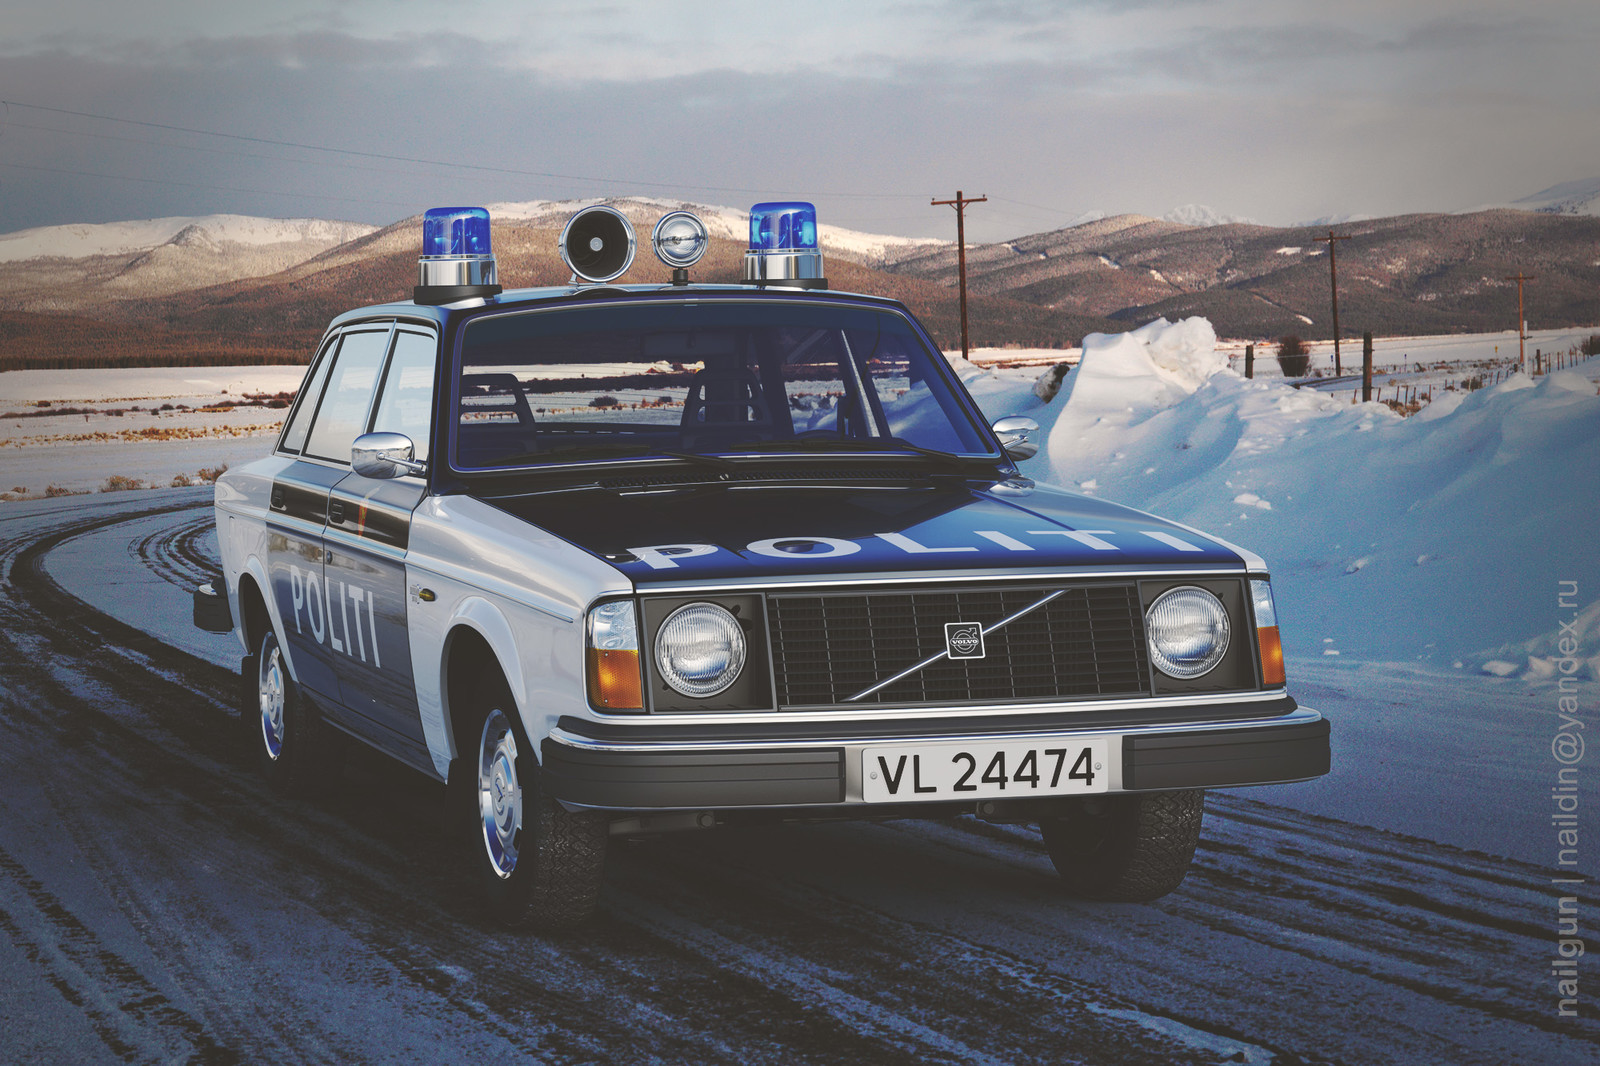 Police Norway